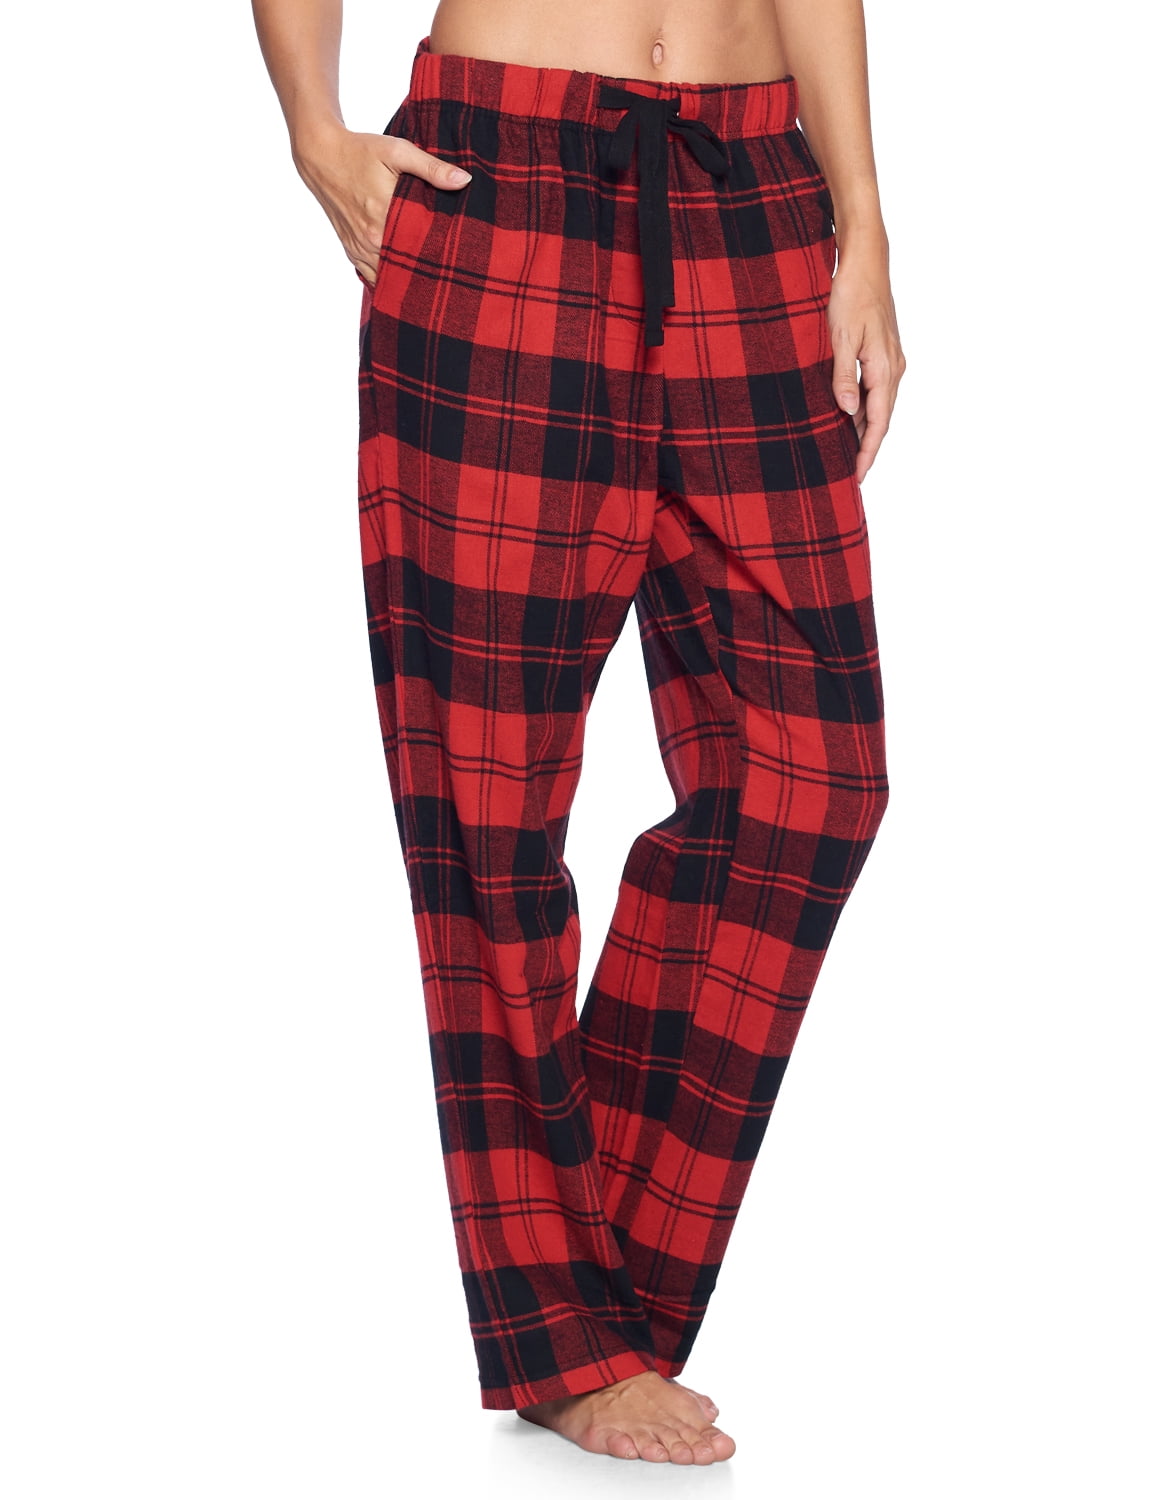 Women's, “No Fox Given” Bobbie Brooks Two Piece PJ Pajama Set 